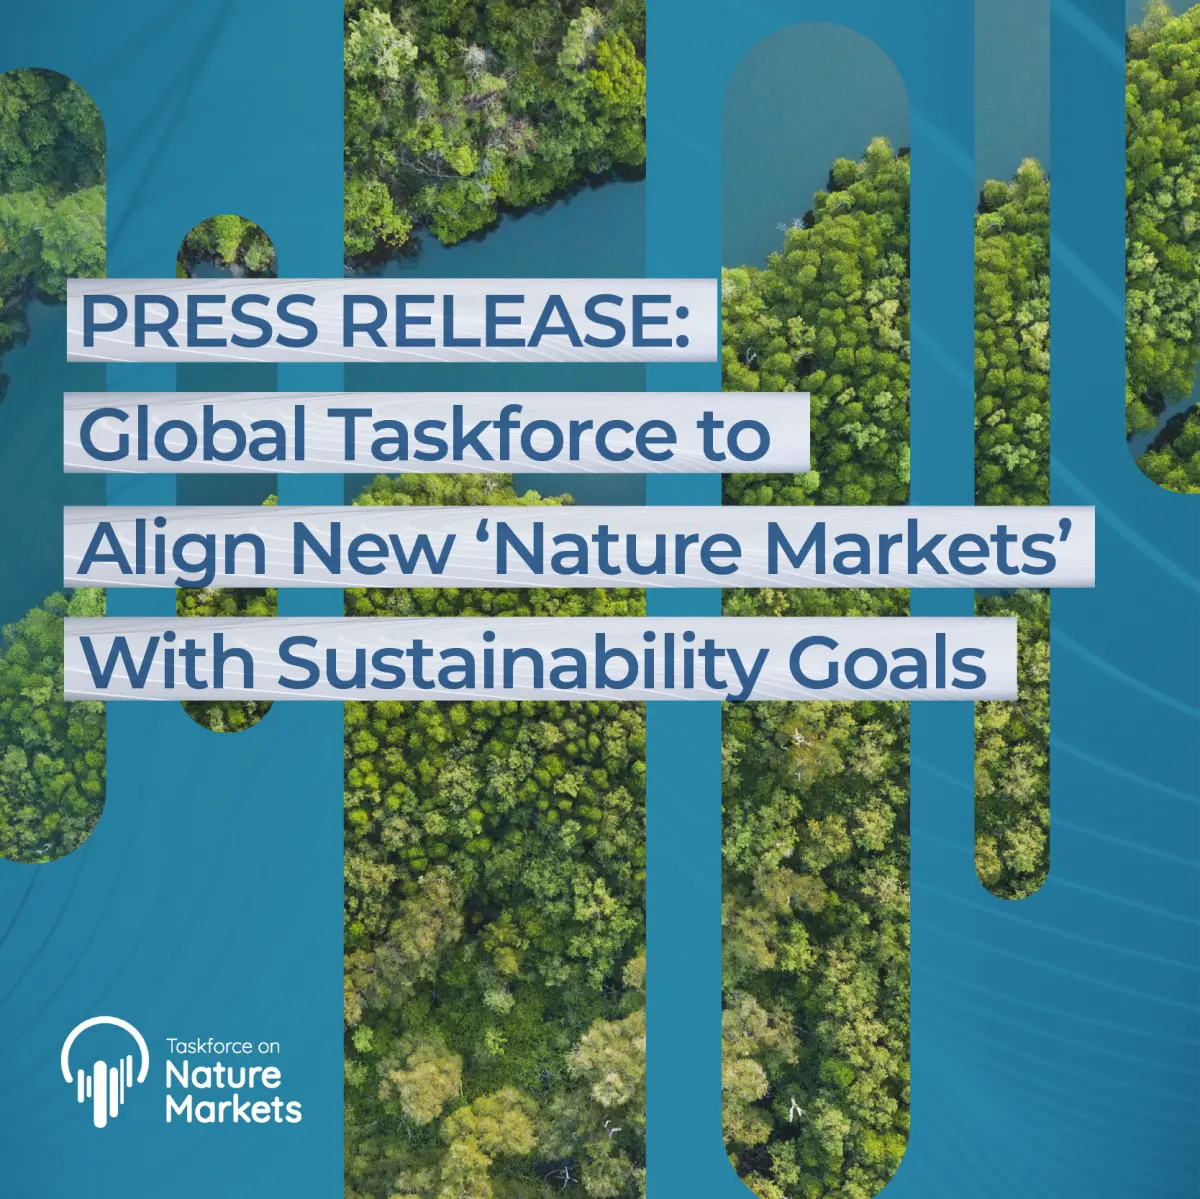 Launch of new Taskforce on Nature Markets